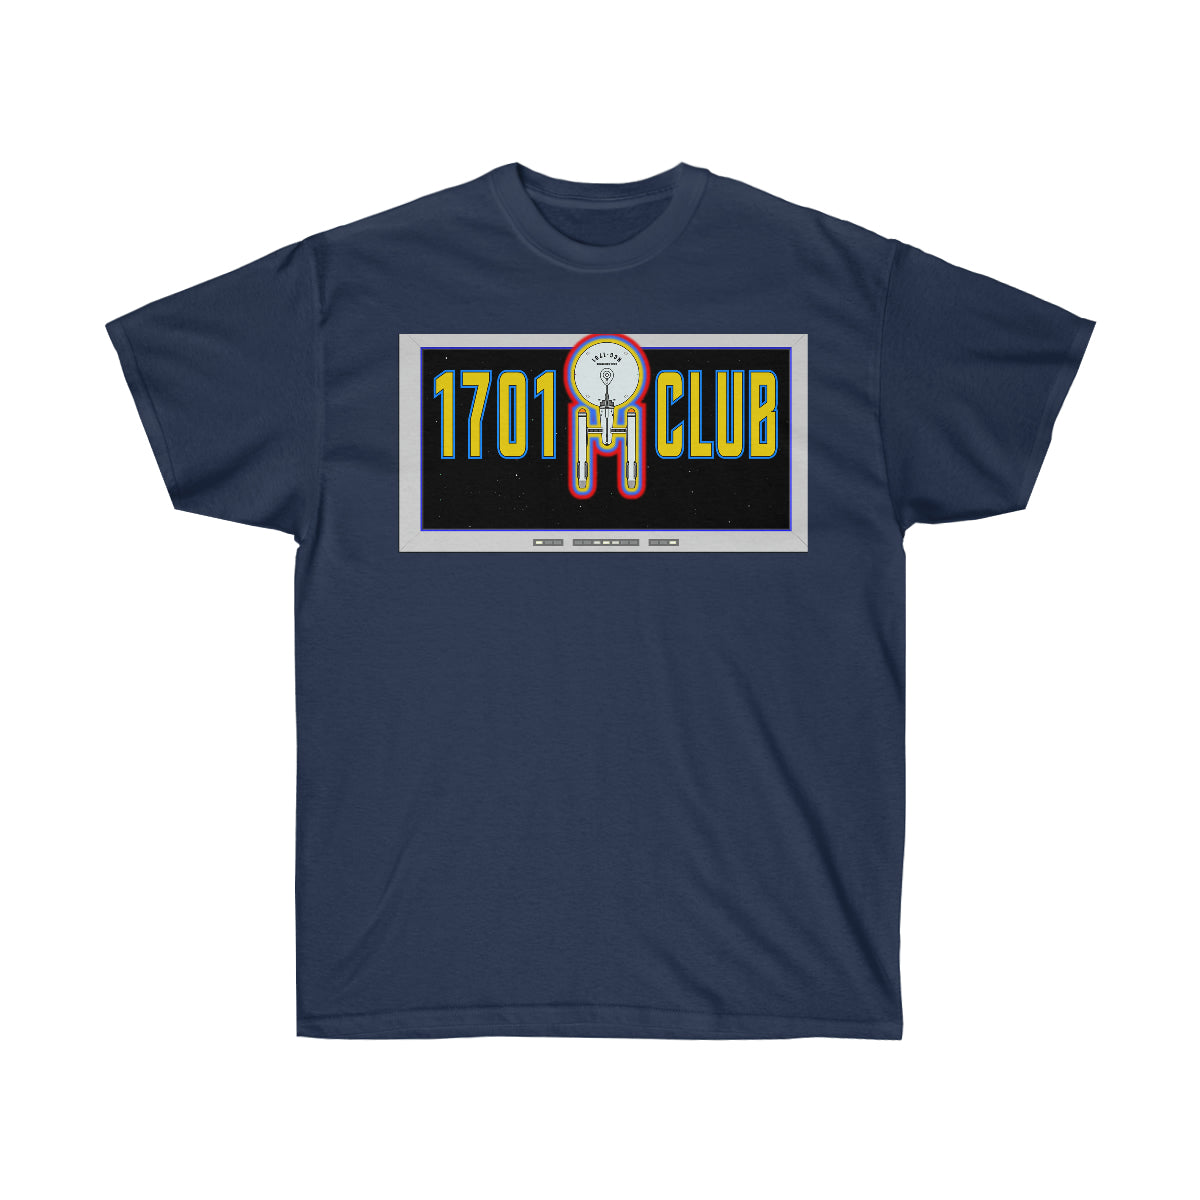 1701 Club Shirt - TOS Enterprise and View Screen